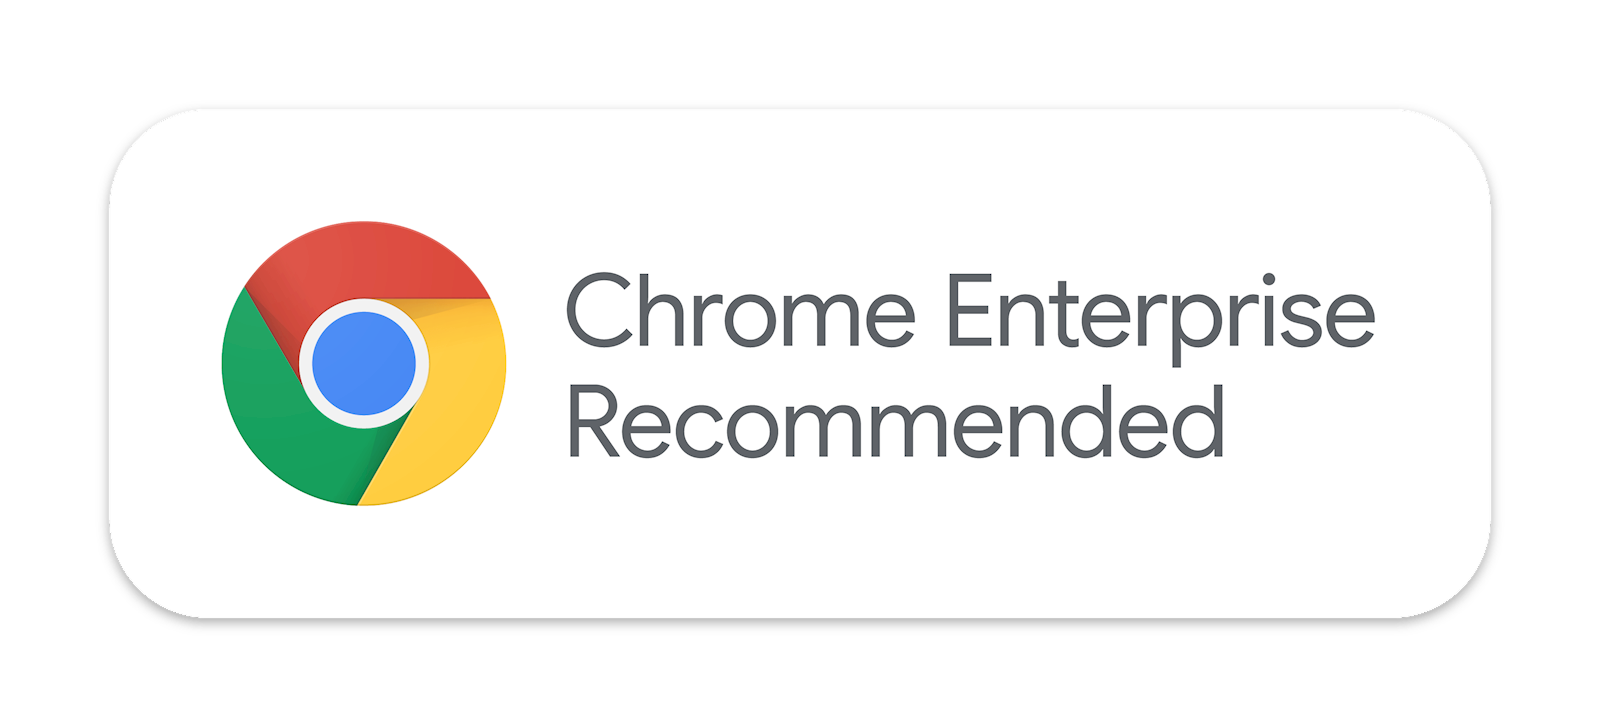 Chrome Enterprise Recommended (image)